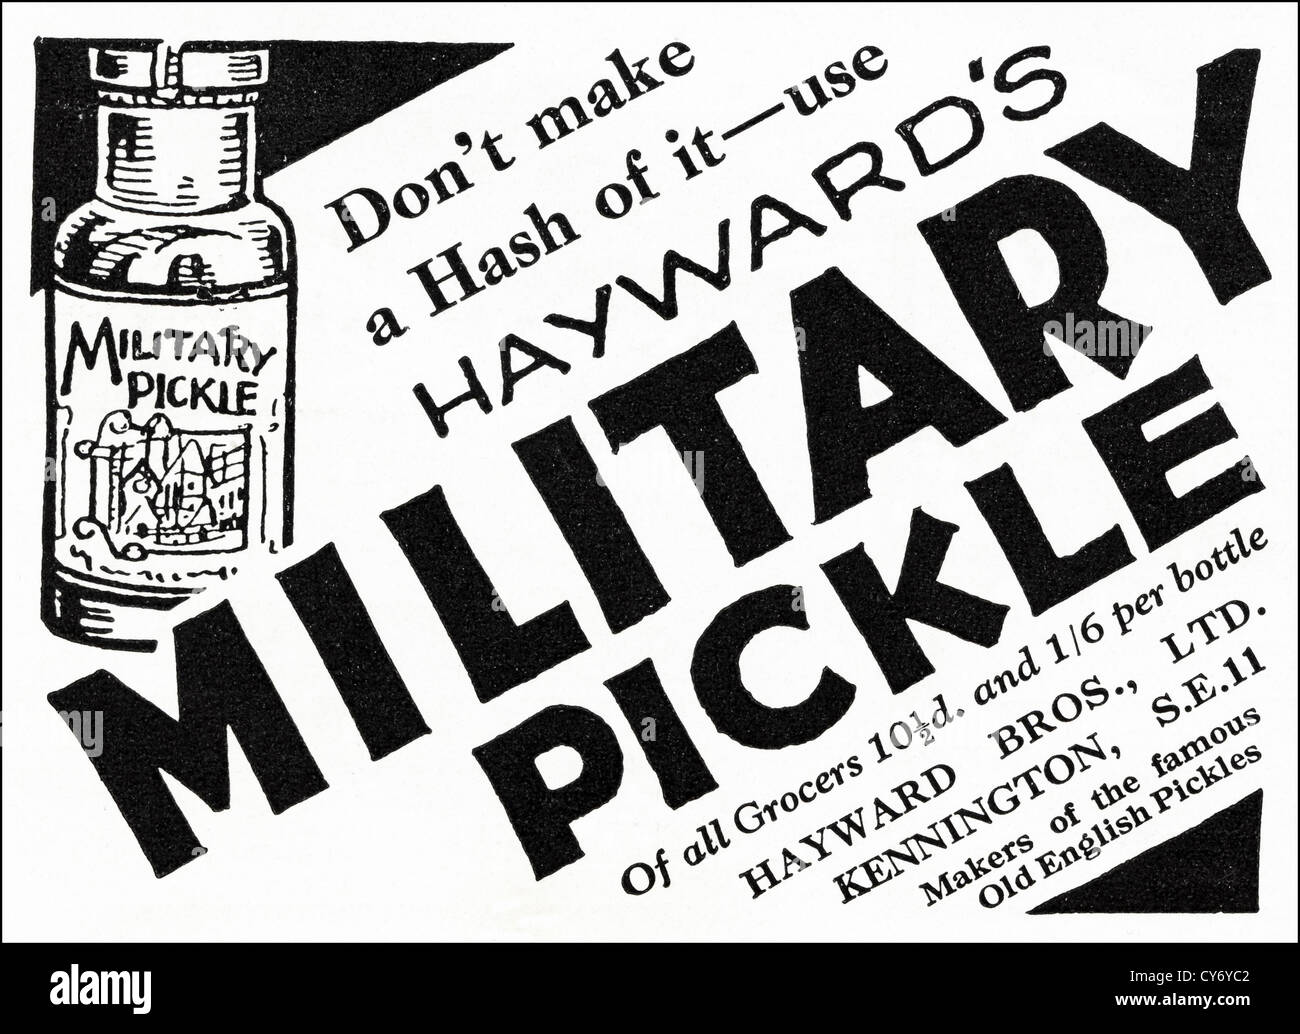 Original 1930s vintage print advertisement from English consumer magazine advertising Hayward's Military Pickle Stock Photo